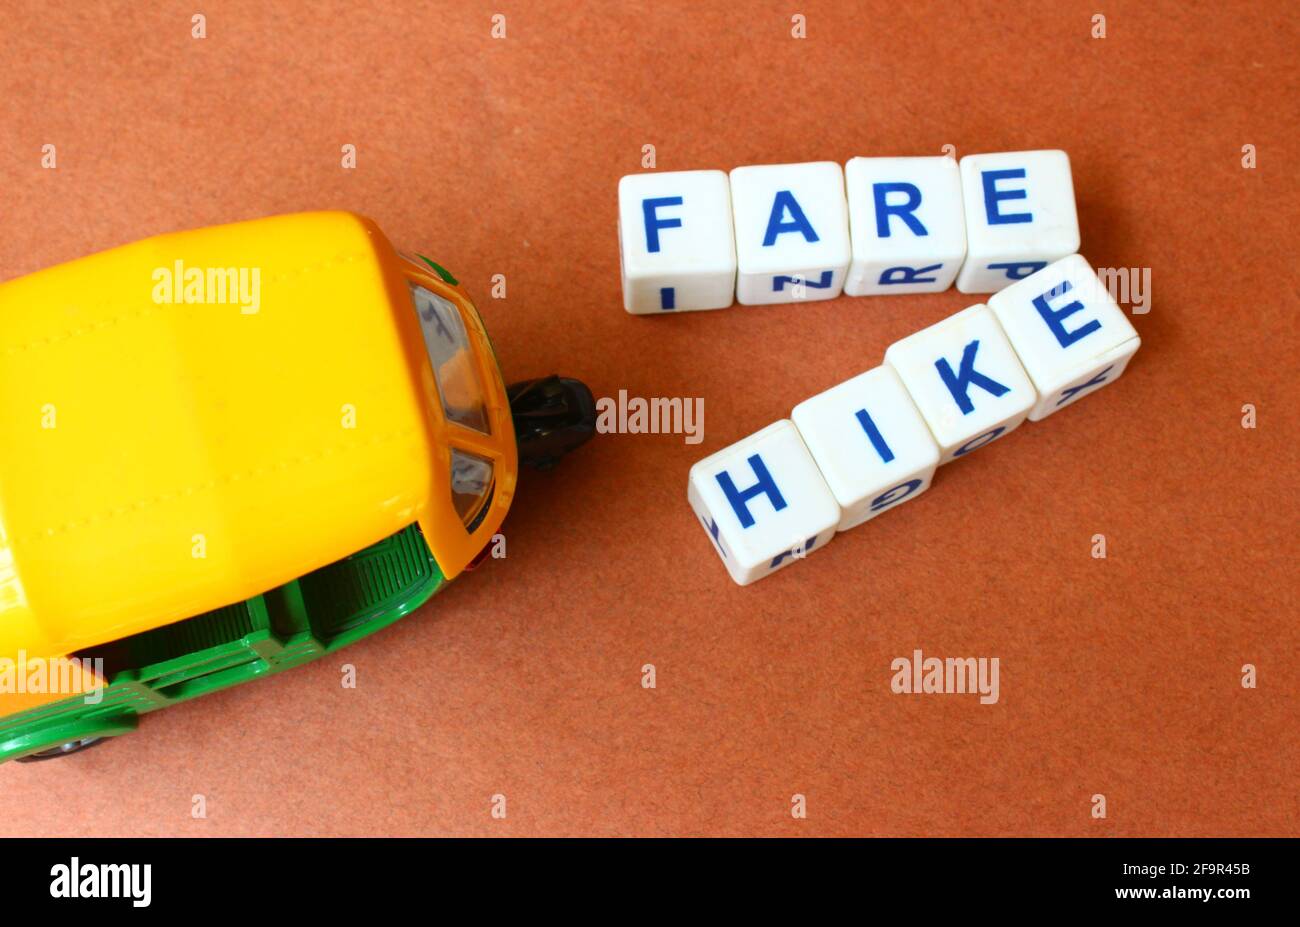 Auto rickshaw fare hike concept depiction Stock Photo